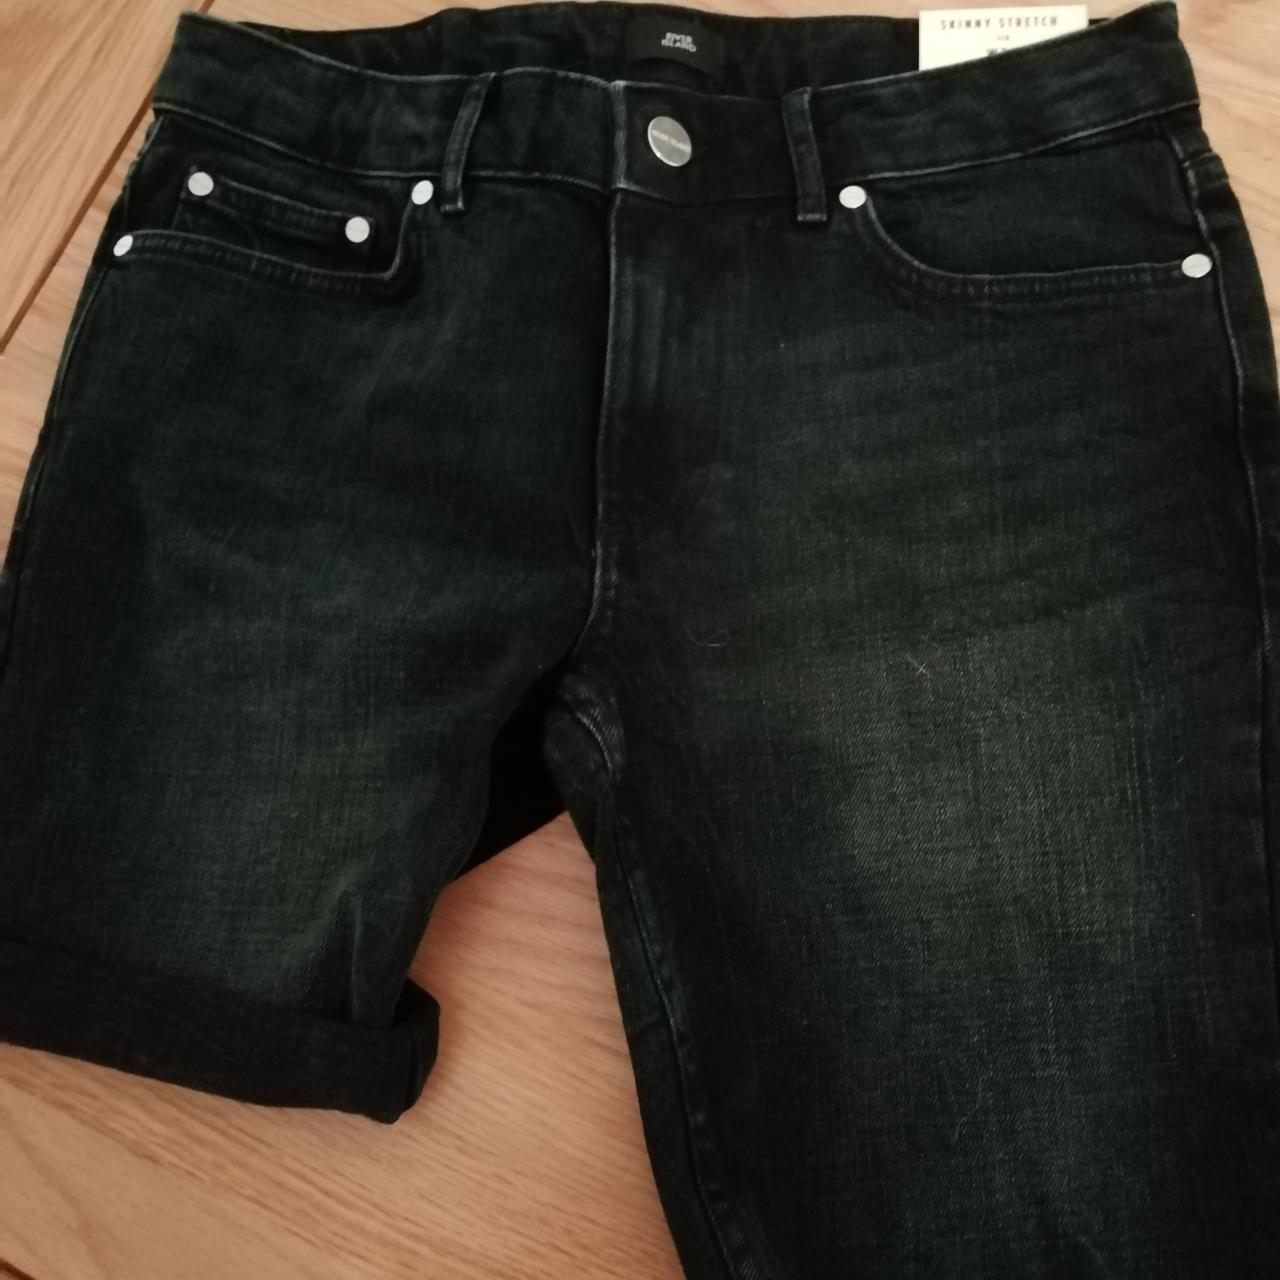 black skinny fit jeans size small brand new w 28 - Depop